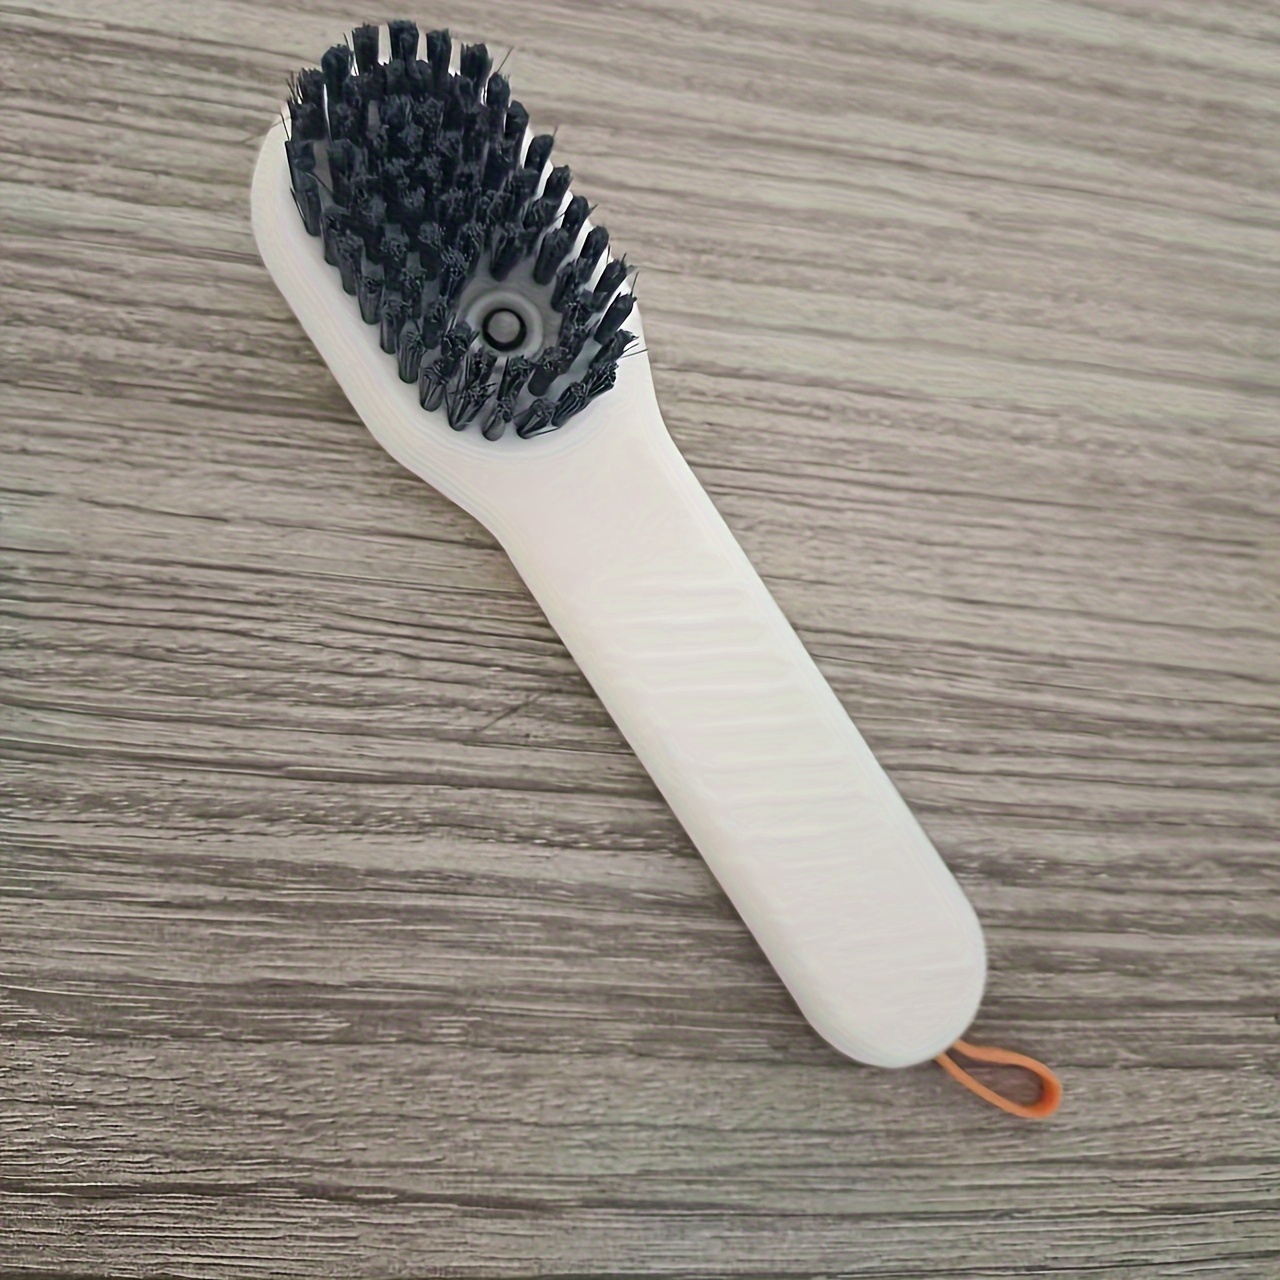 Soft Bristle Cleaning Brush,Press Type Automatic Liquid Adding